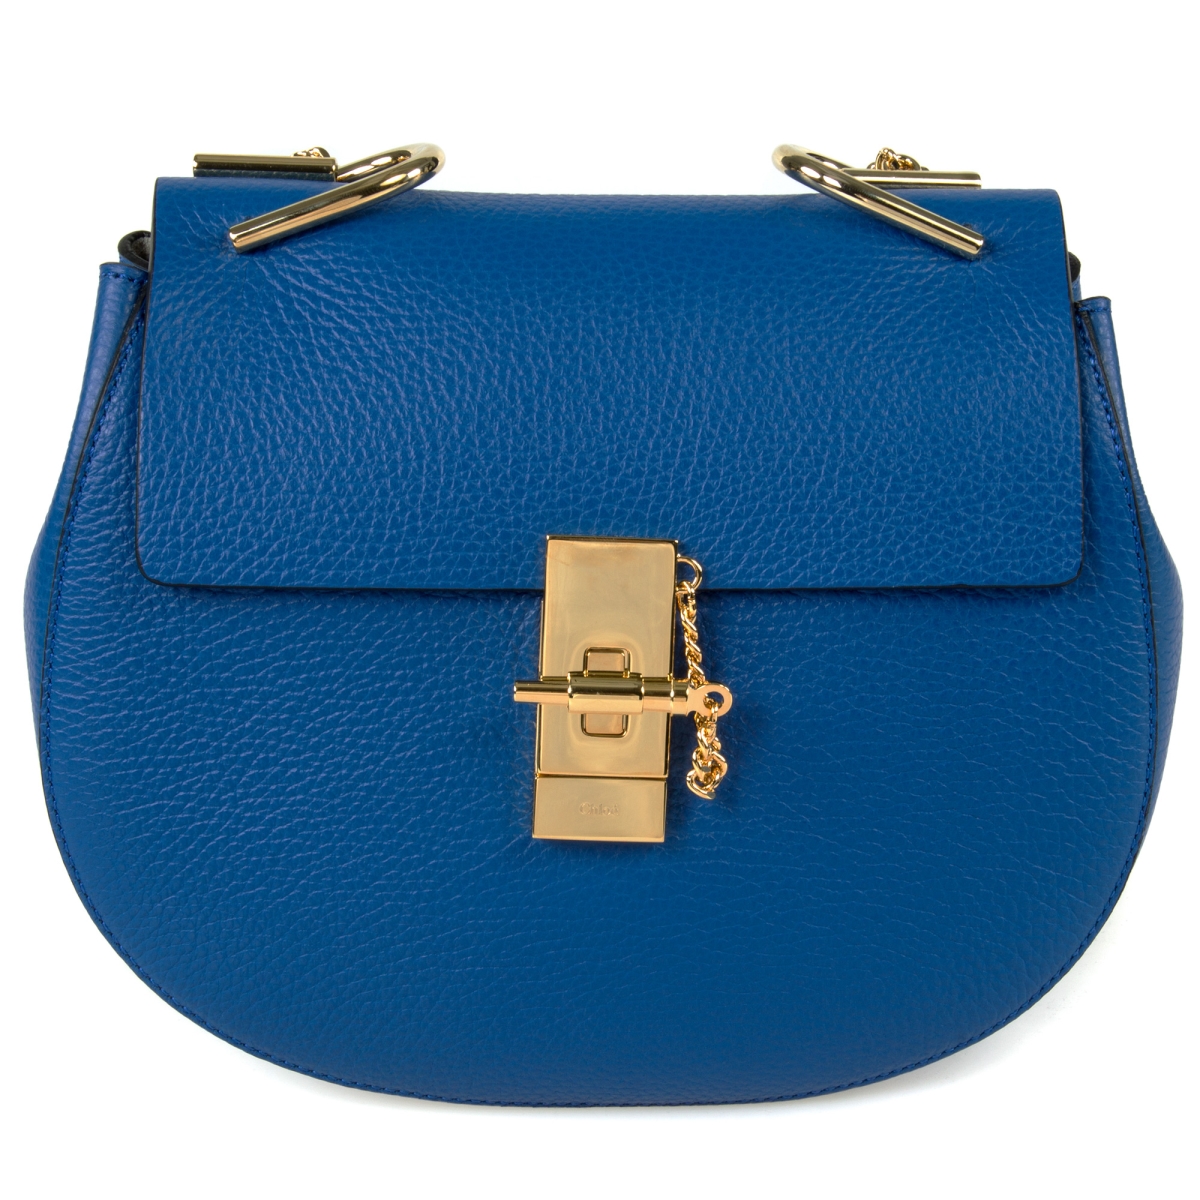 Chl-hbag-drw-blu-m Medium Drew Bag, Blue With Gold Hardware